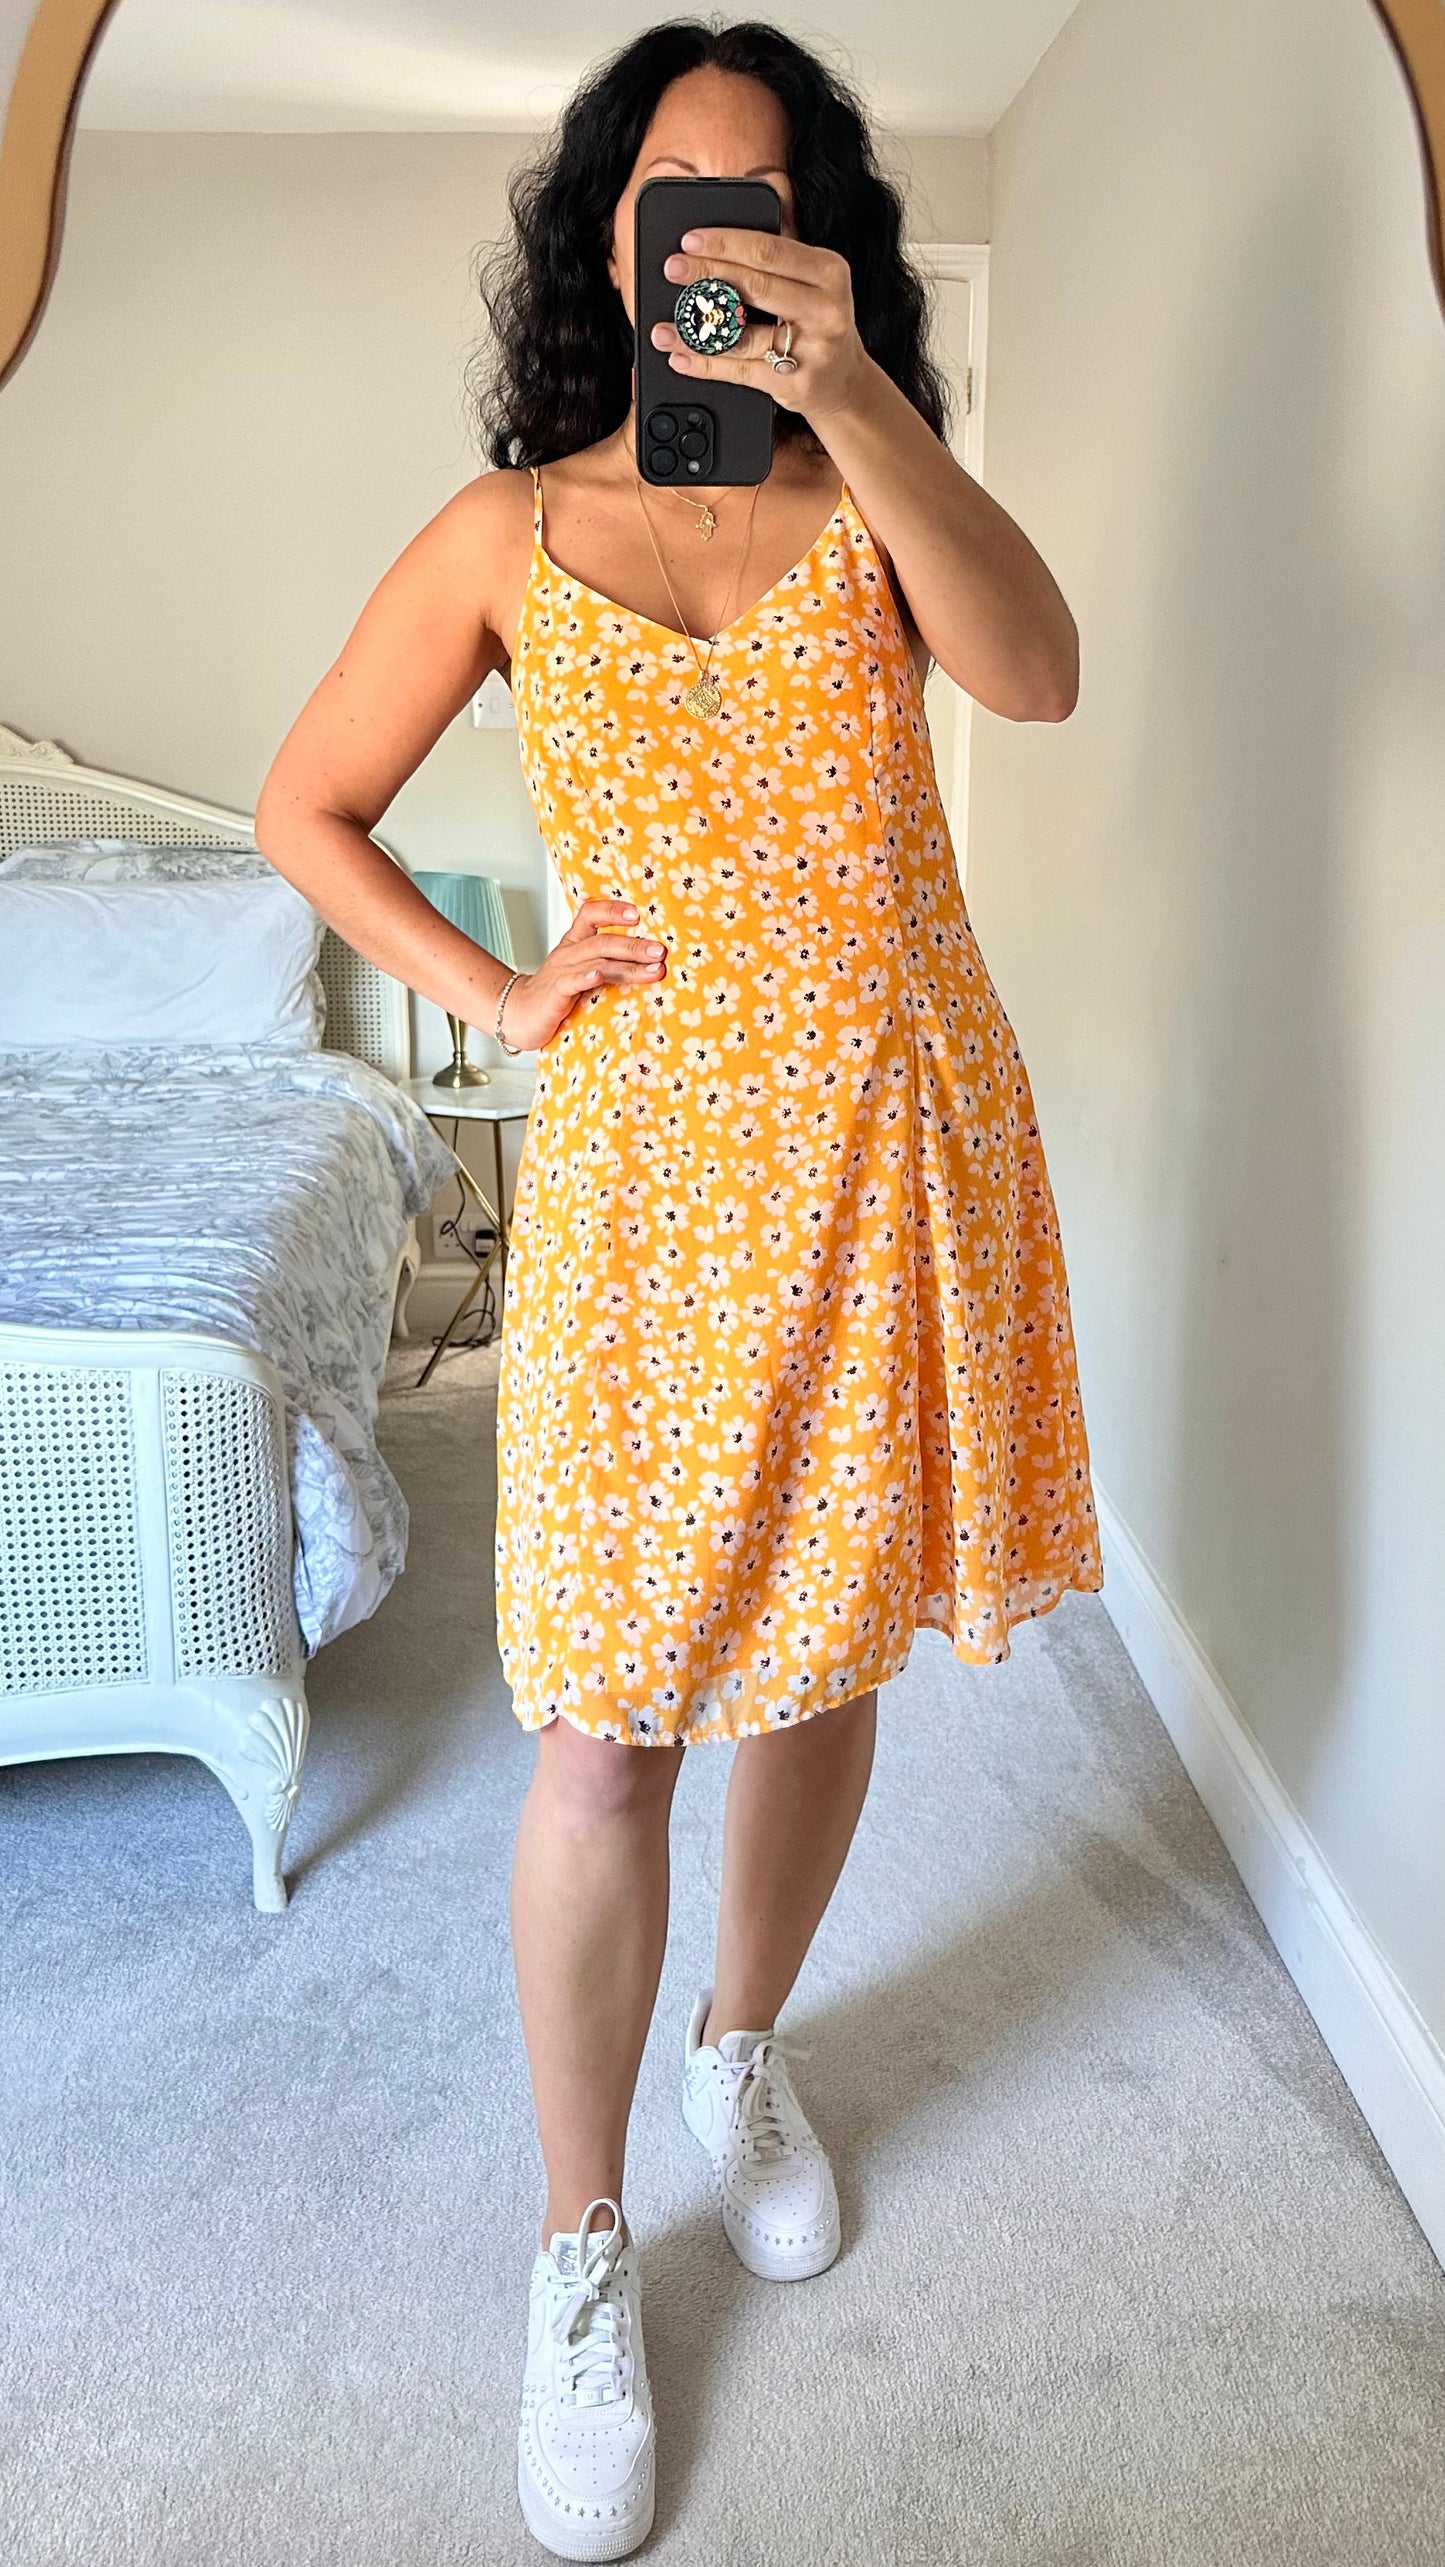 Selected Femme @ Anthropologie orange white floral slip mini dress large XL UK 12-14 vgc